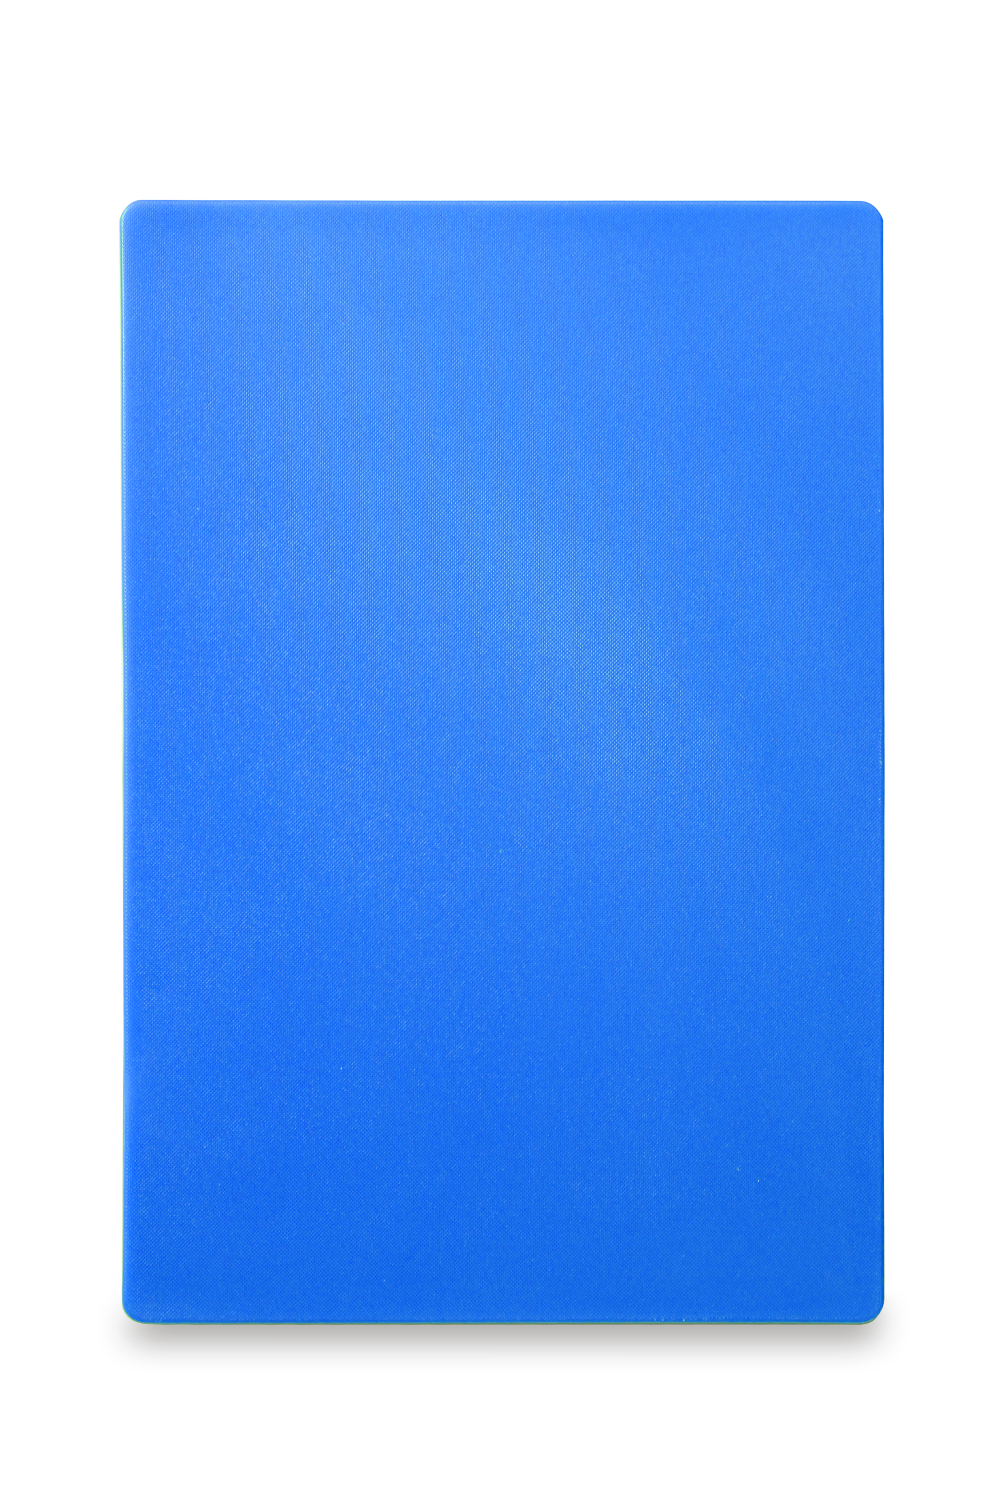 HACCP Schneidbrett 600x400 Blau